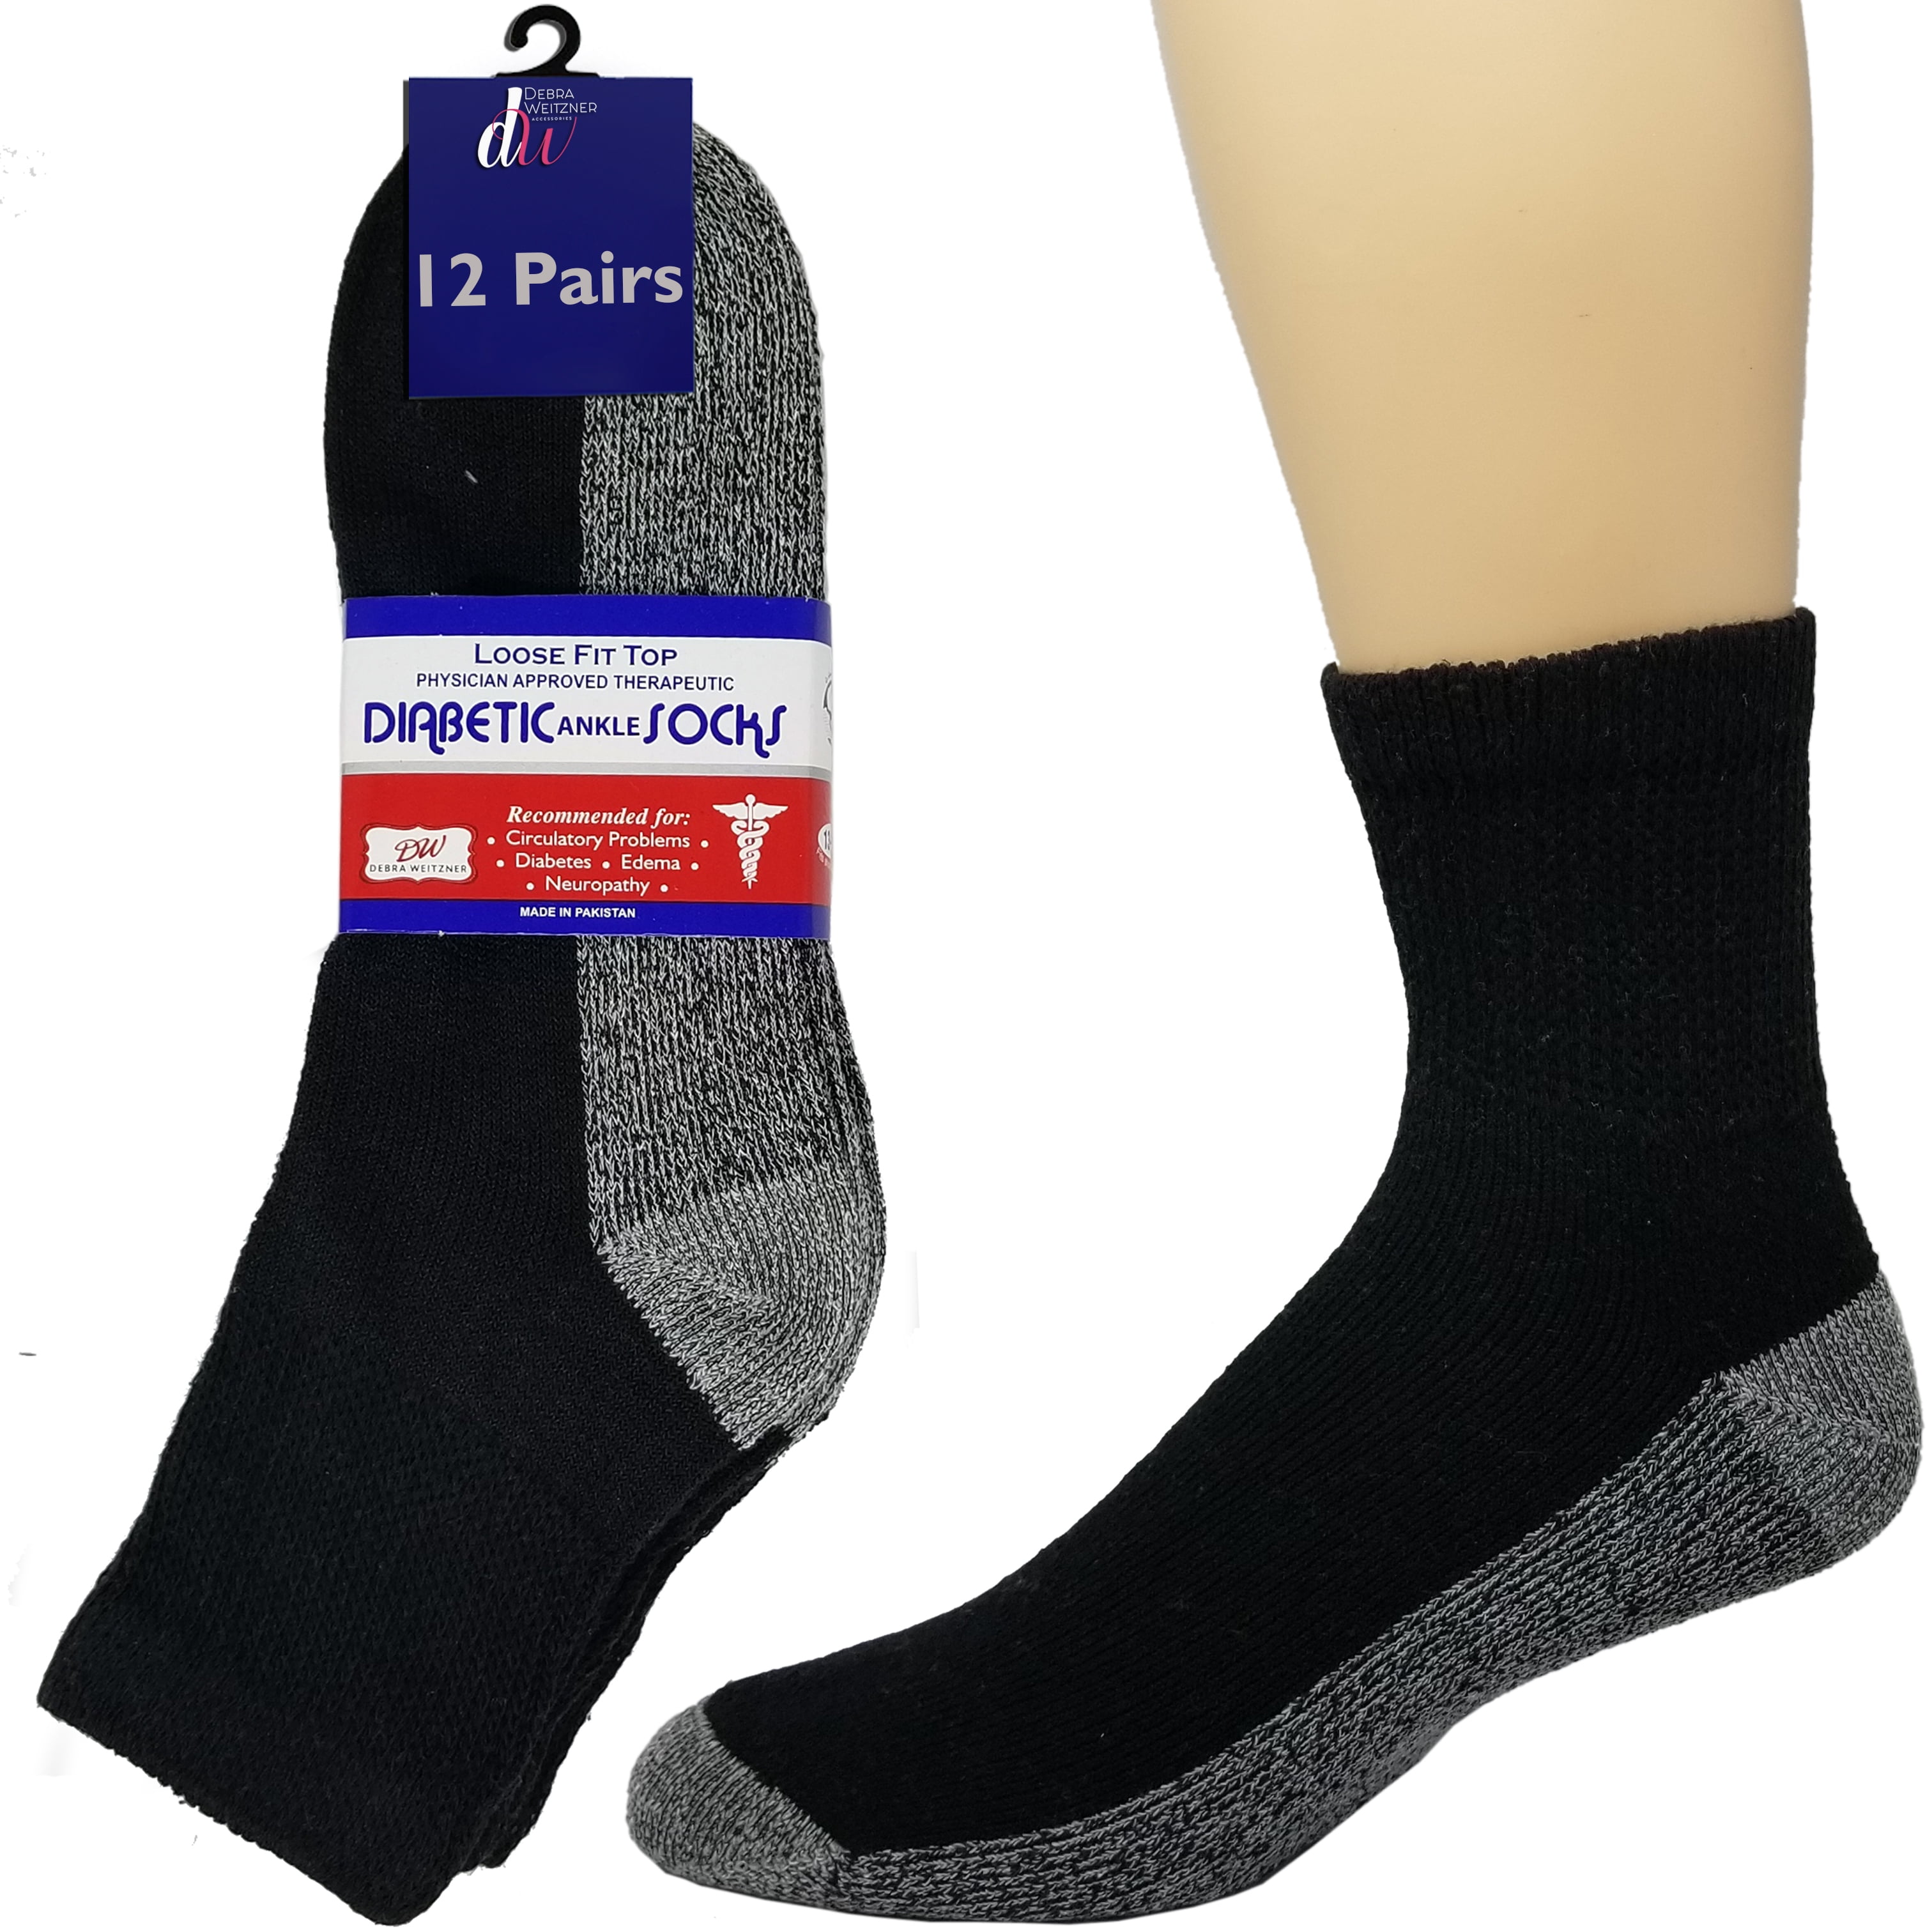 IOMI 3 Pack Extra Wide Cotton Non Elastic Low Cut Quarter Ankle Diabetic Socks 